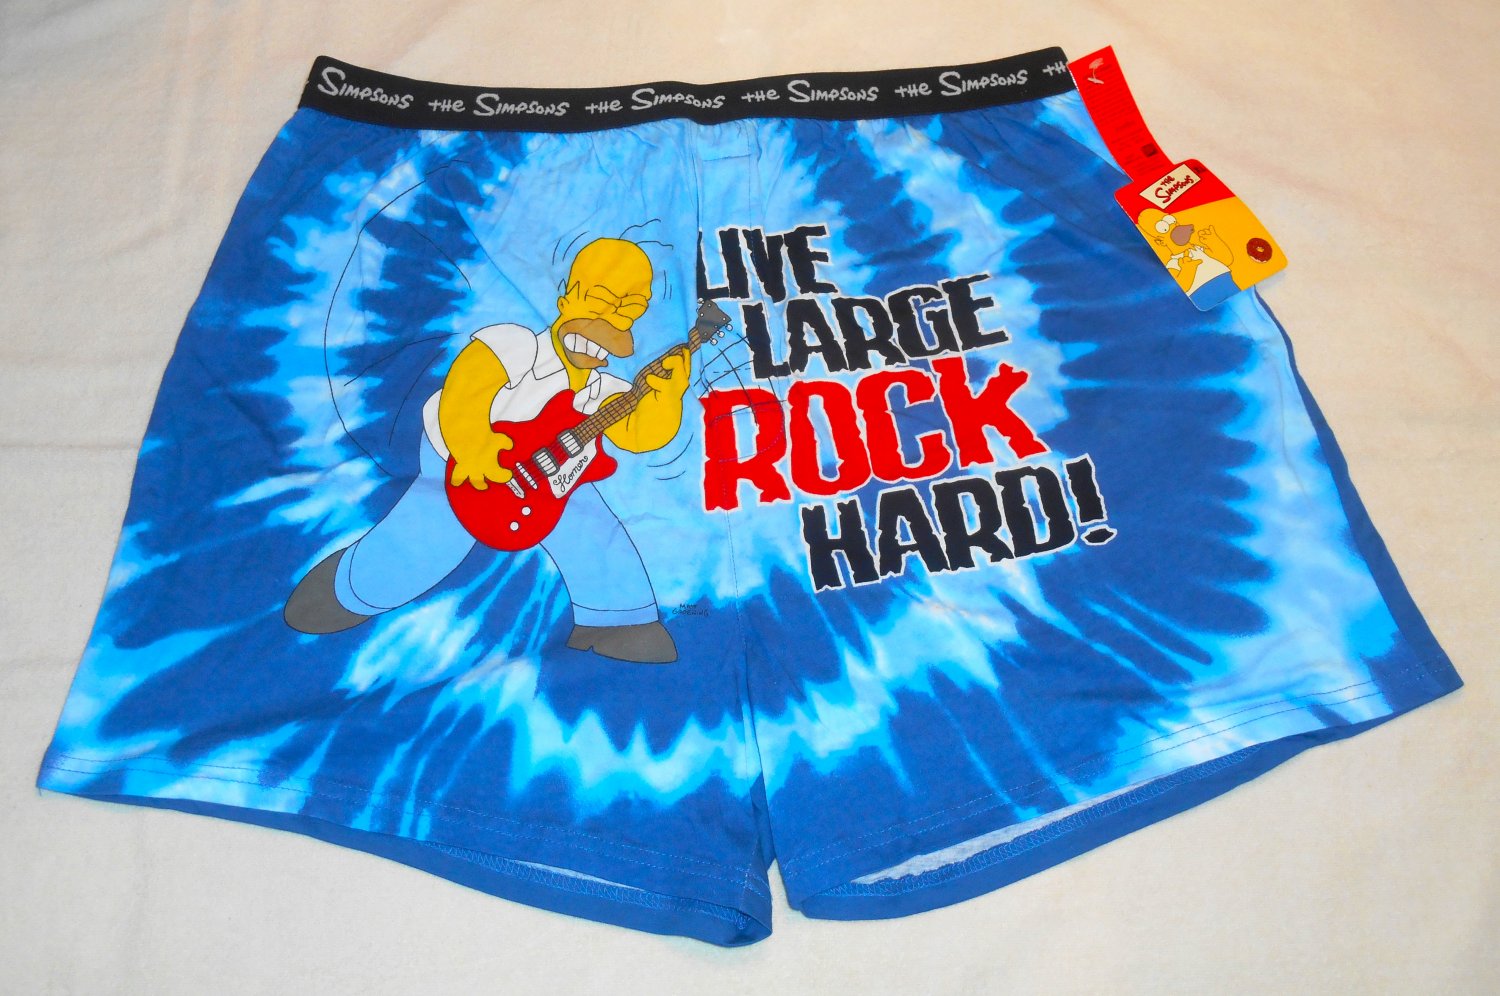 Homer Simpson Live Large Rock Hard Boxer Shorts Size Large L Blue Guitar Underwear NWT 2004